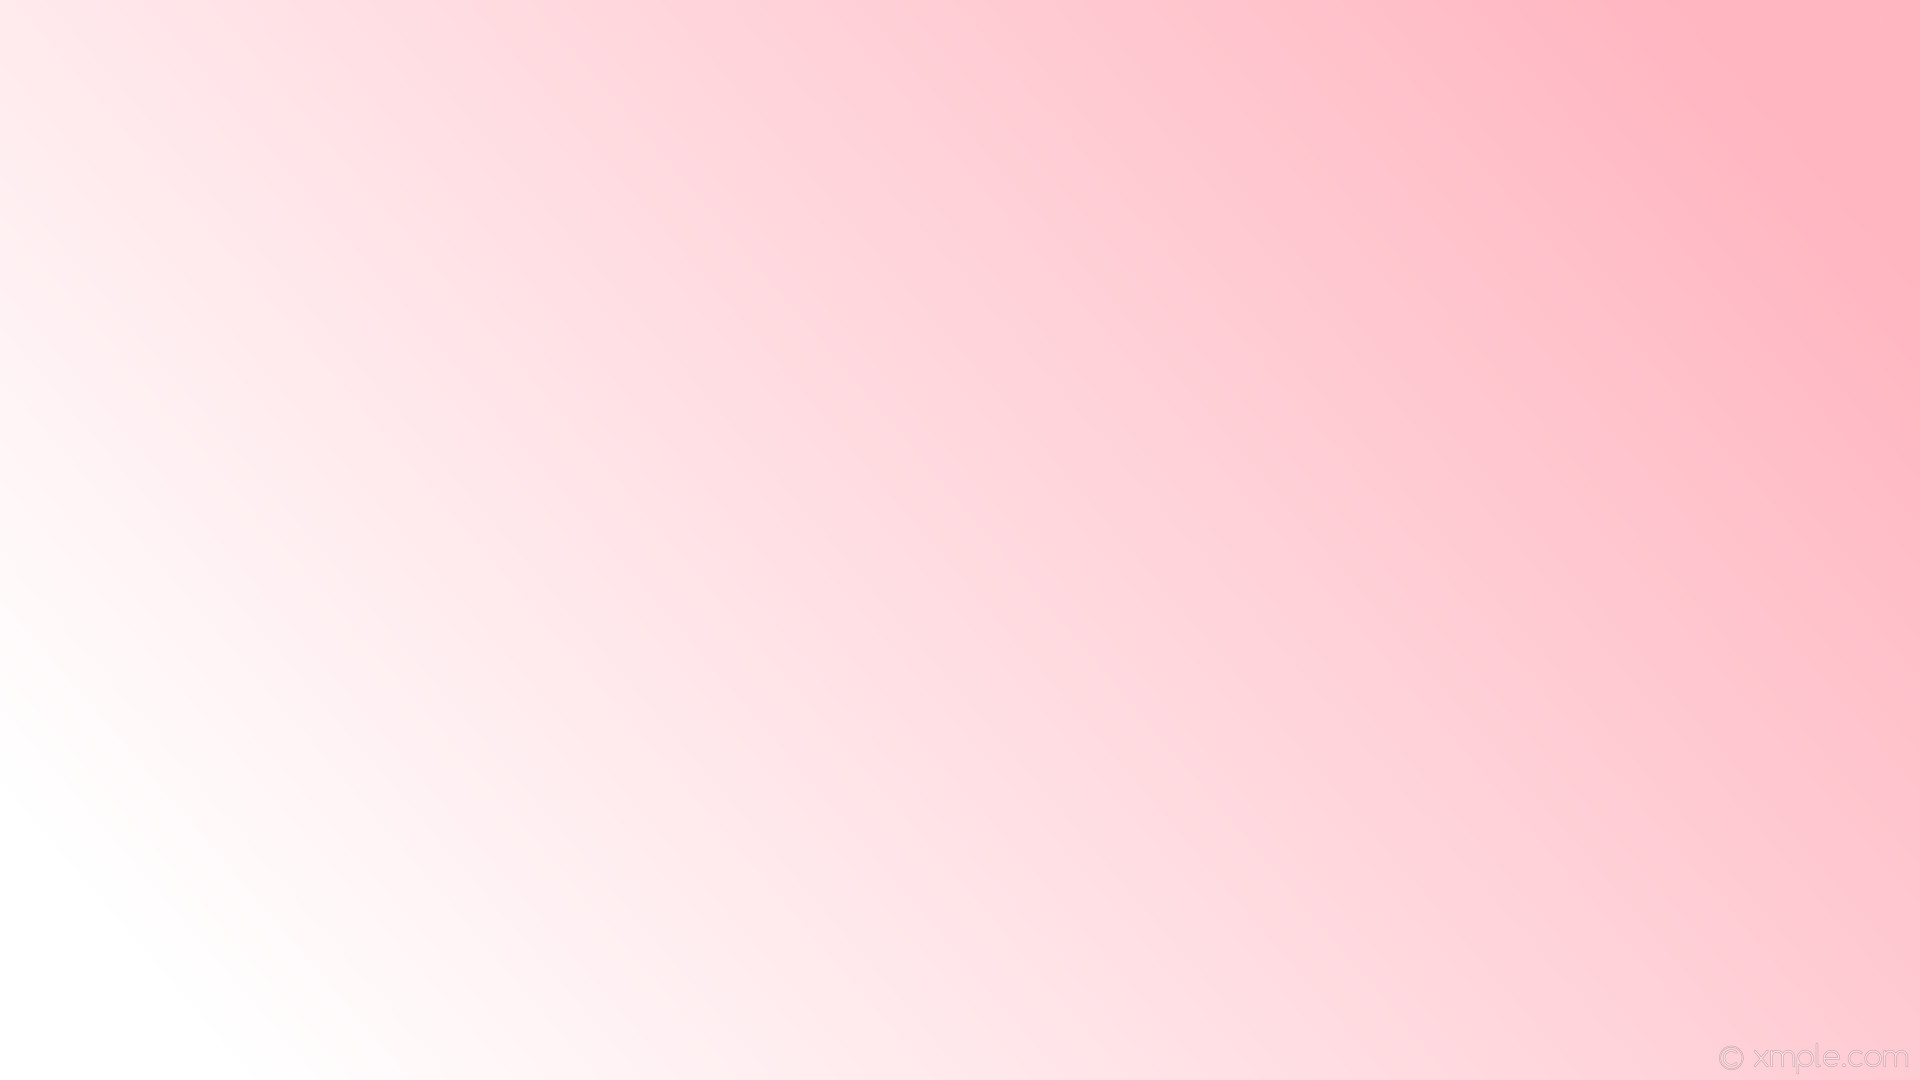 1920x1080 wallpaper pink gradient white linear light pink #ffb6c1 #ffffff 15Â°